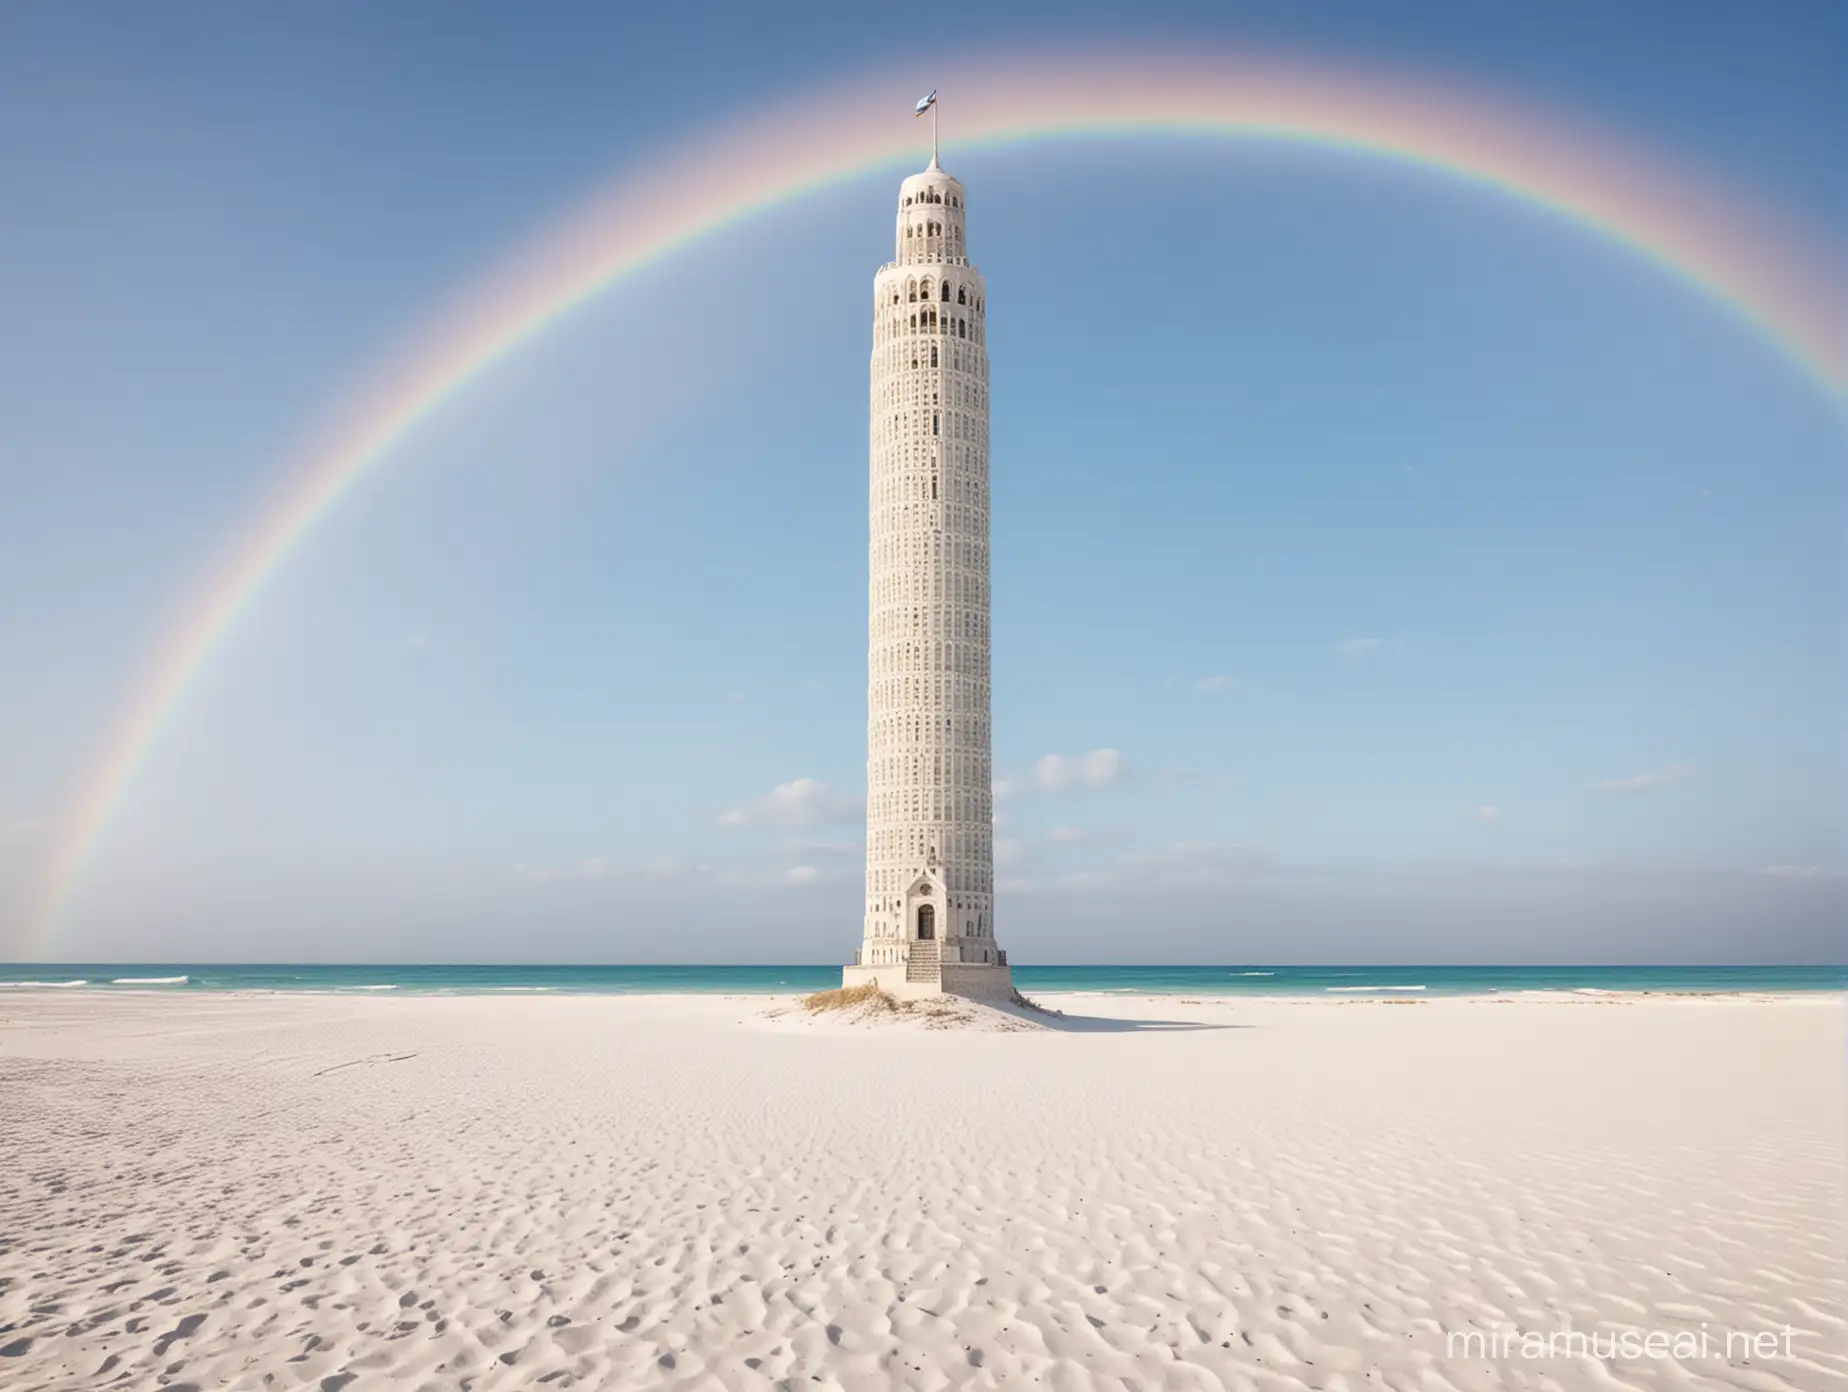 Single tall white romantic fantasy skyscraper tower on a white sand beach, clear blue sky, rainbow, bright day
